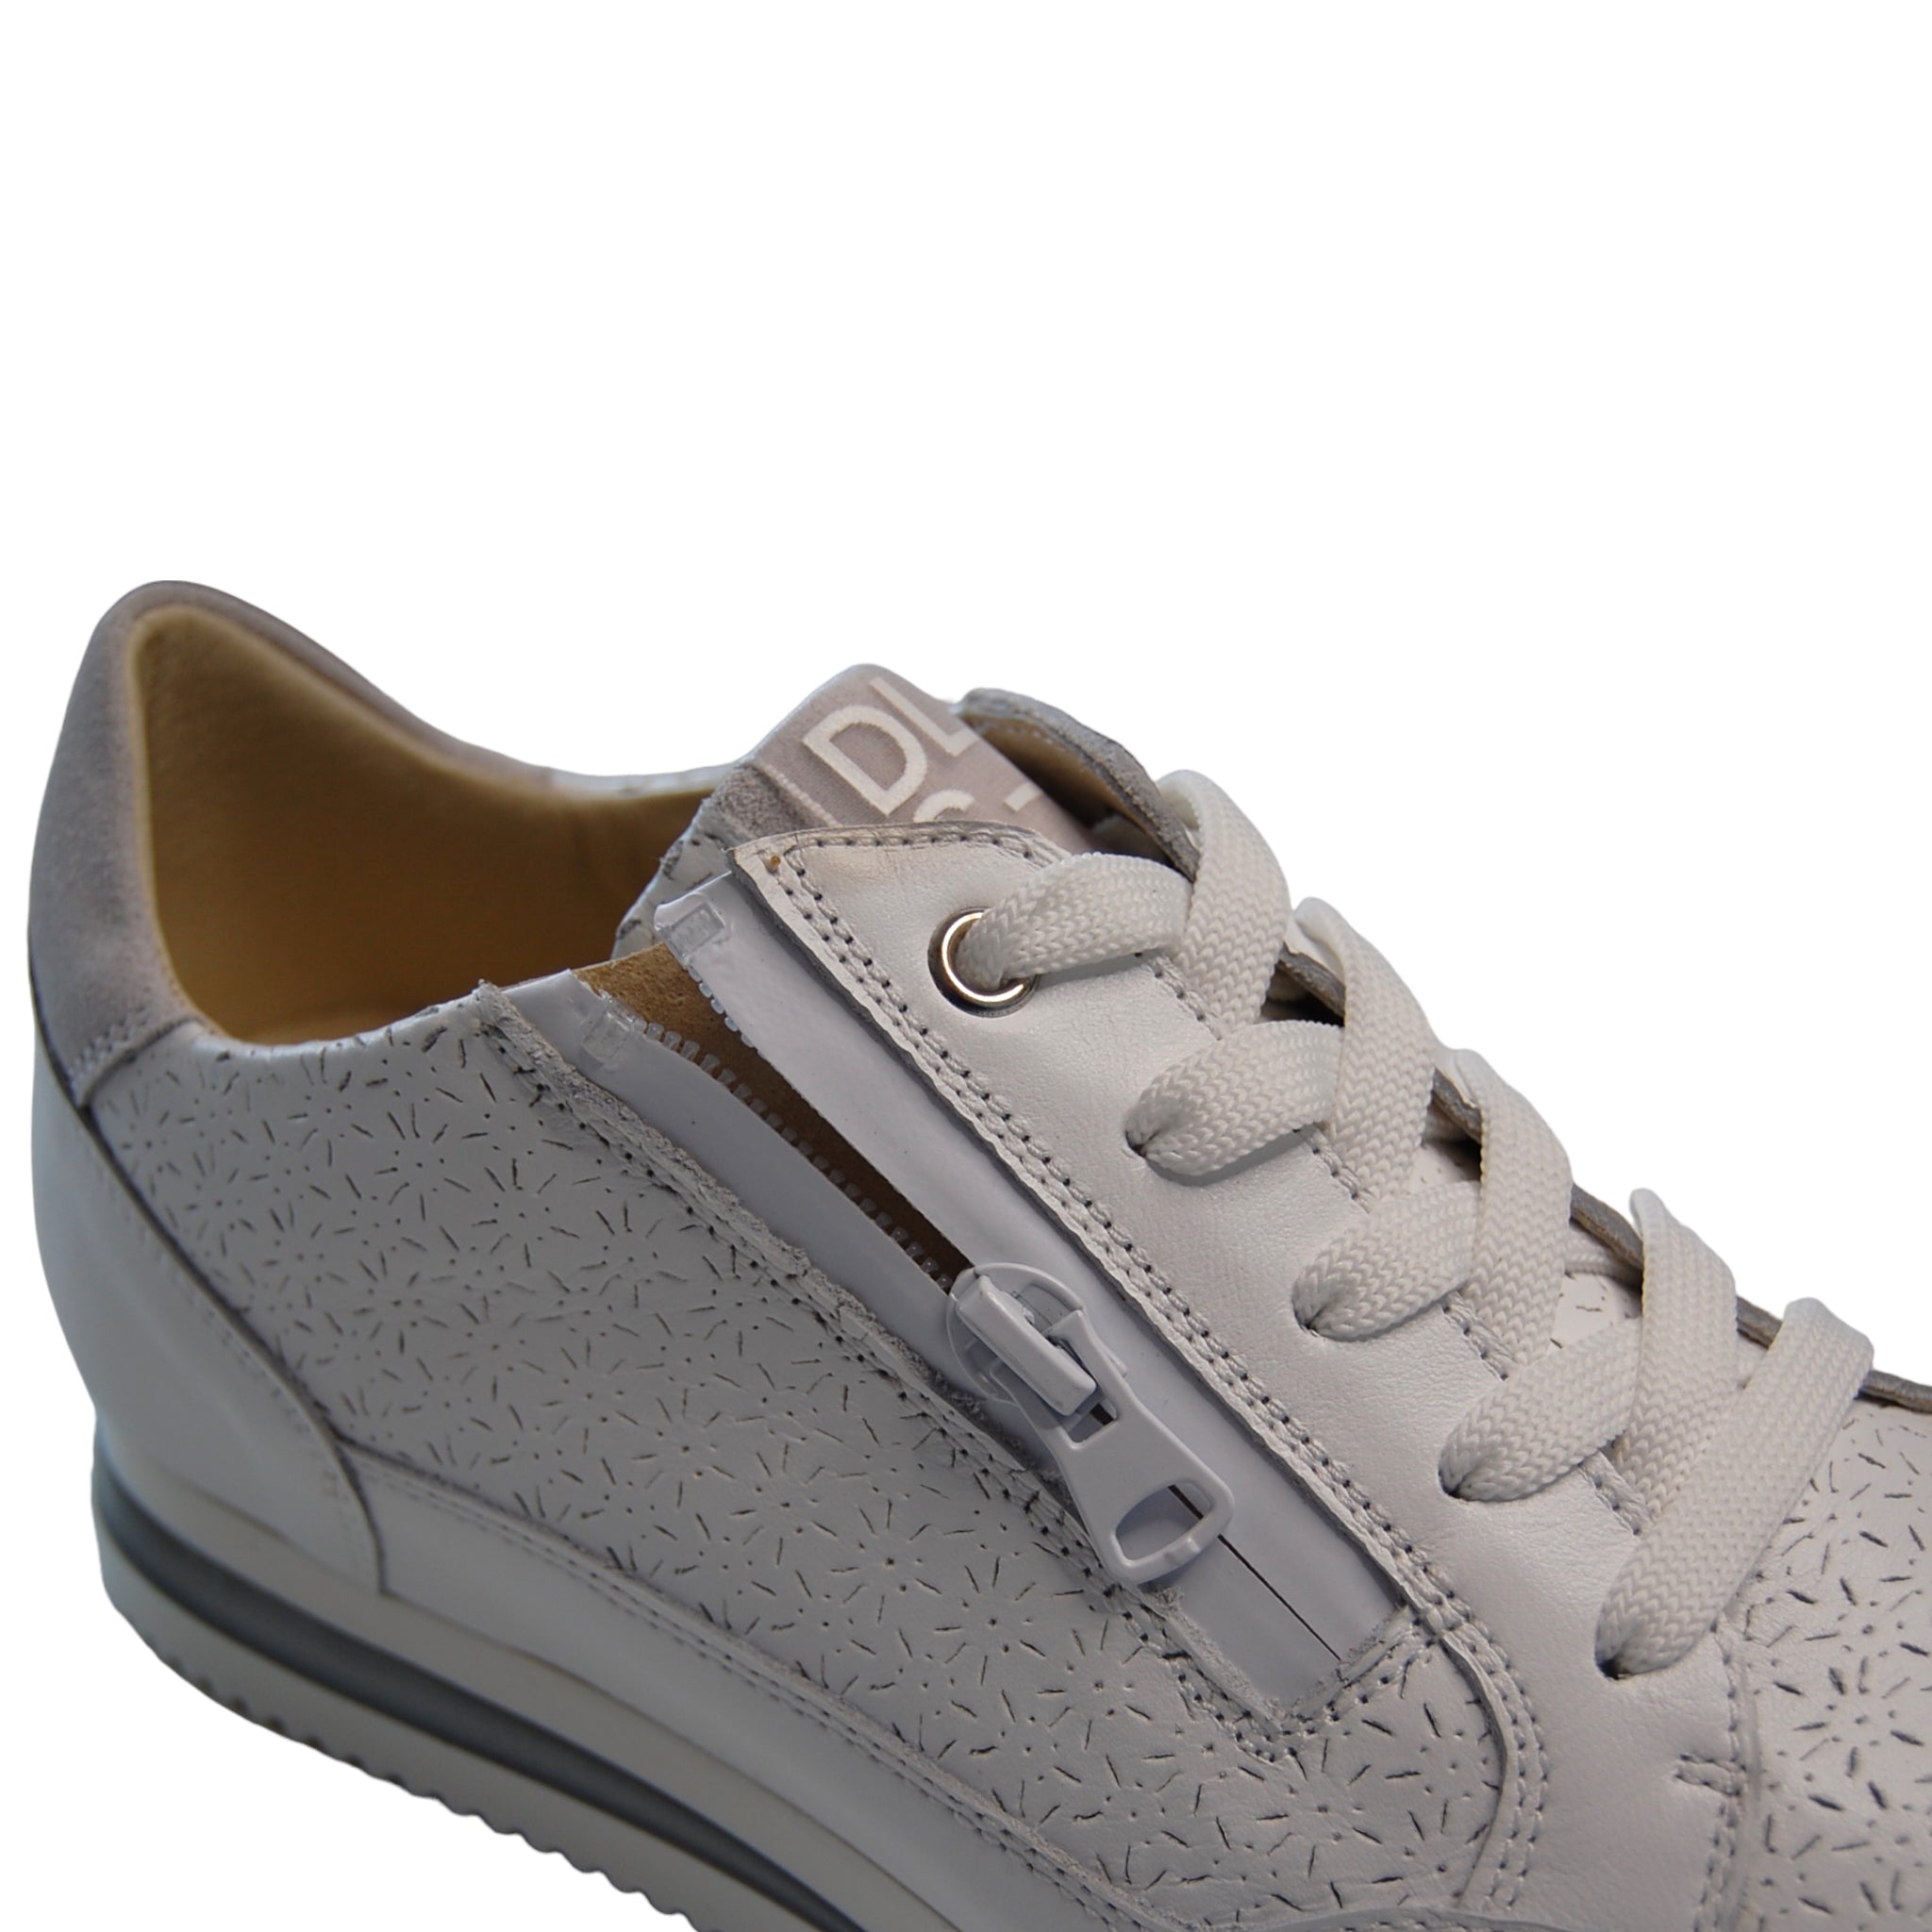 DL Sport Perforated Leather Sneaker White 5629 Nabuk Tasso V3 detail view